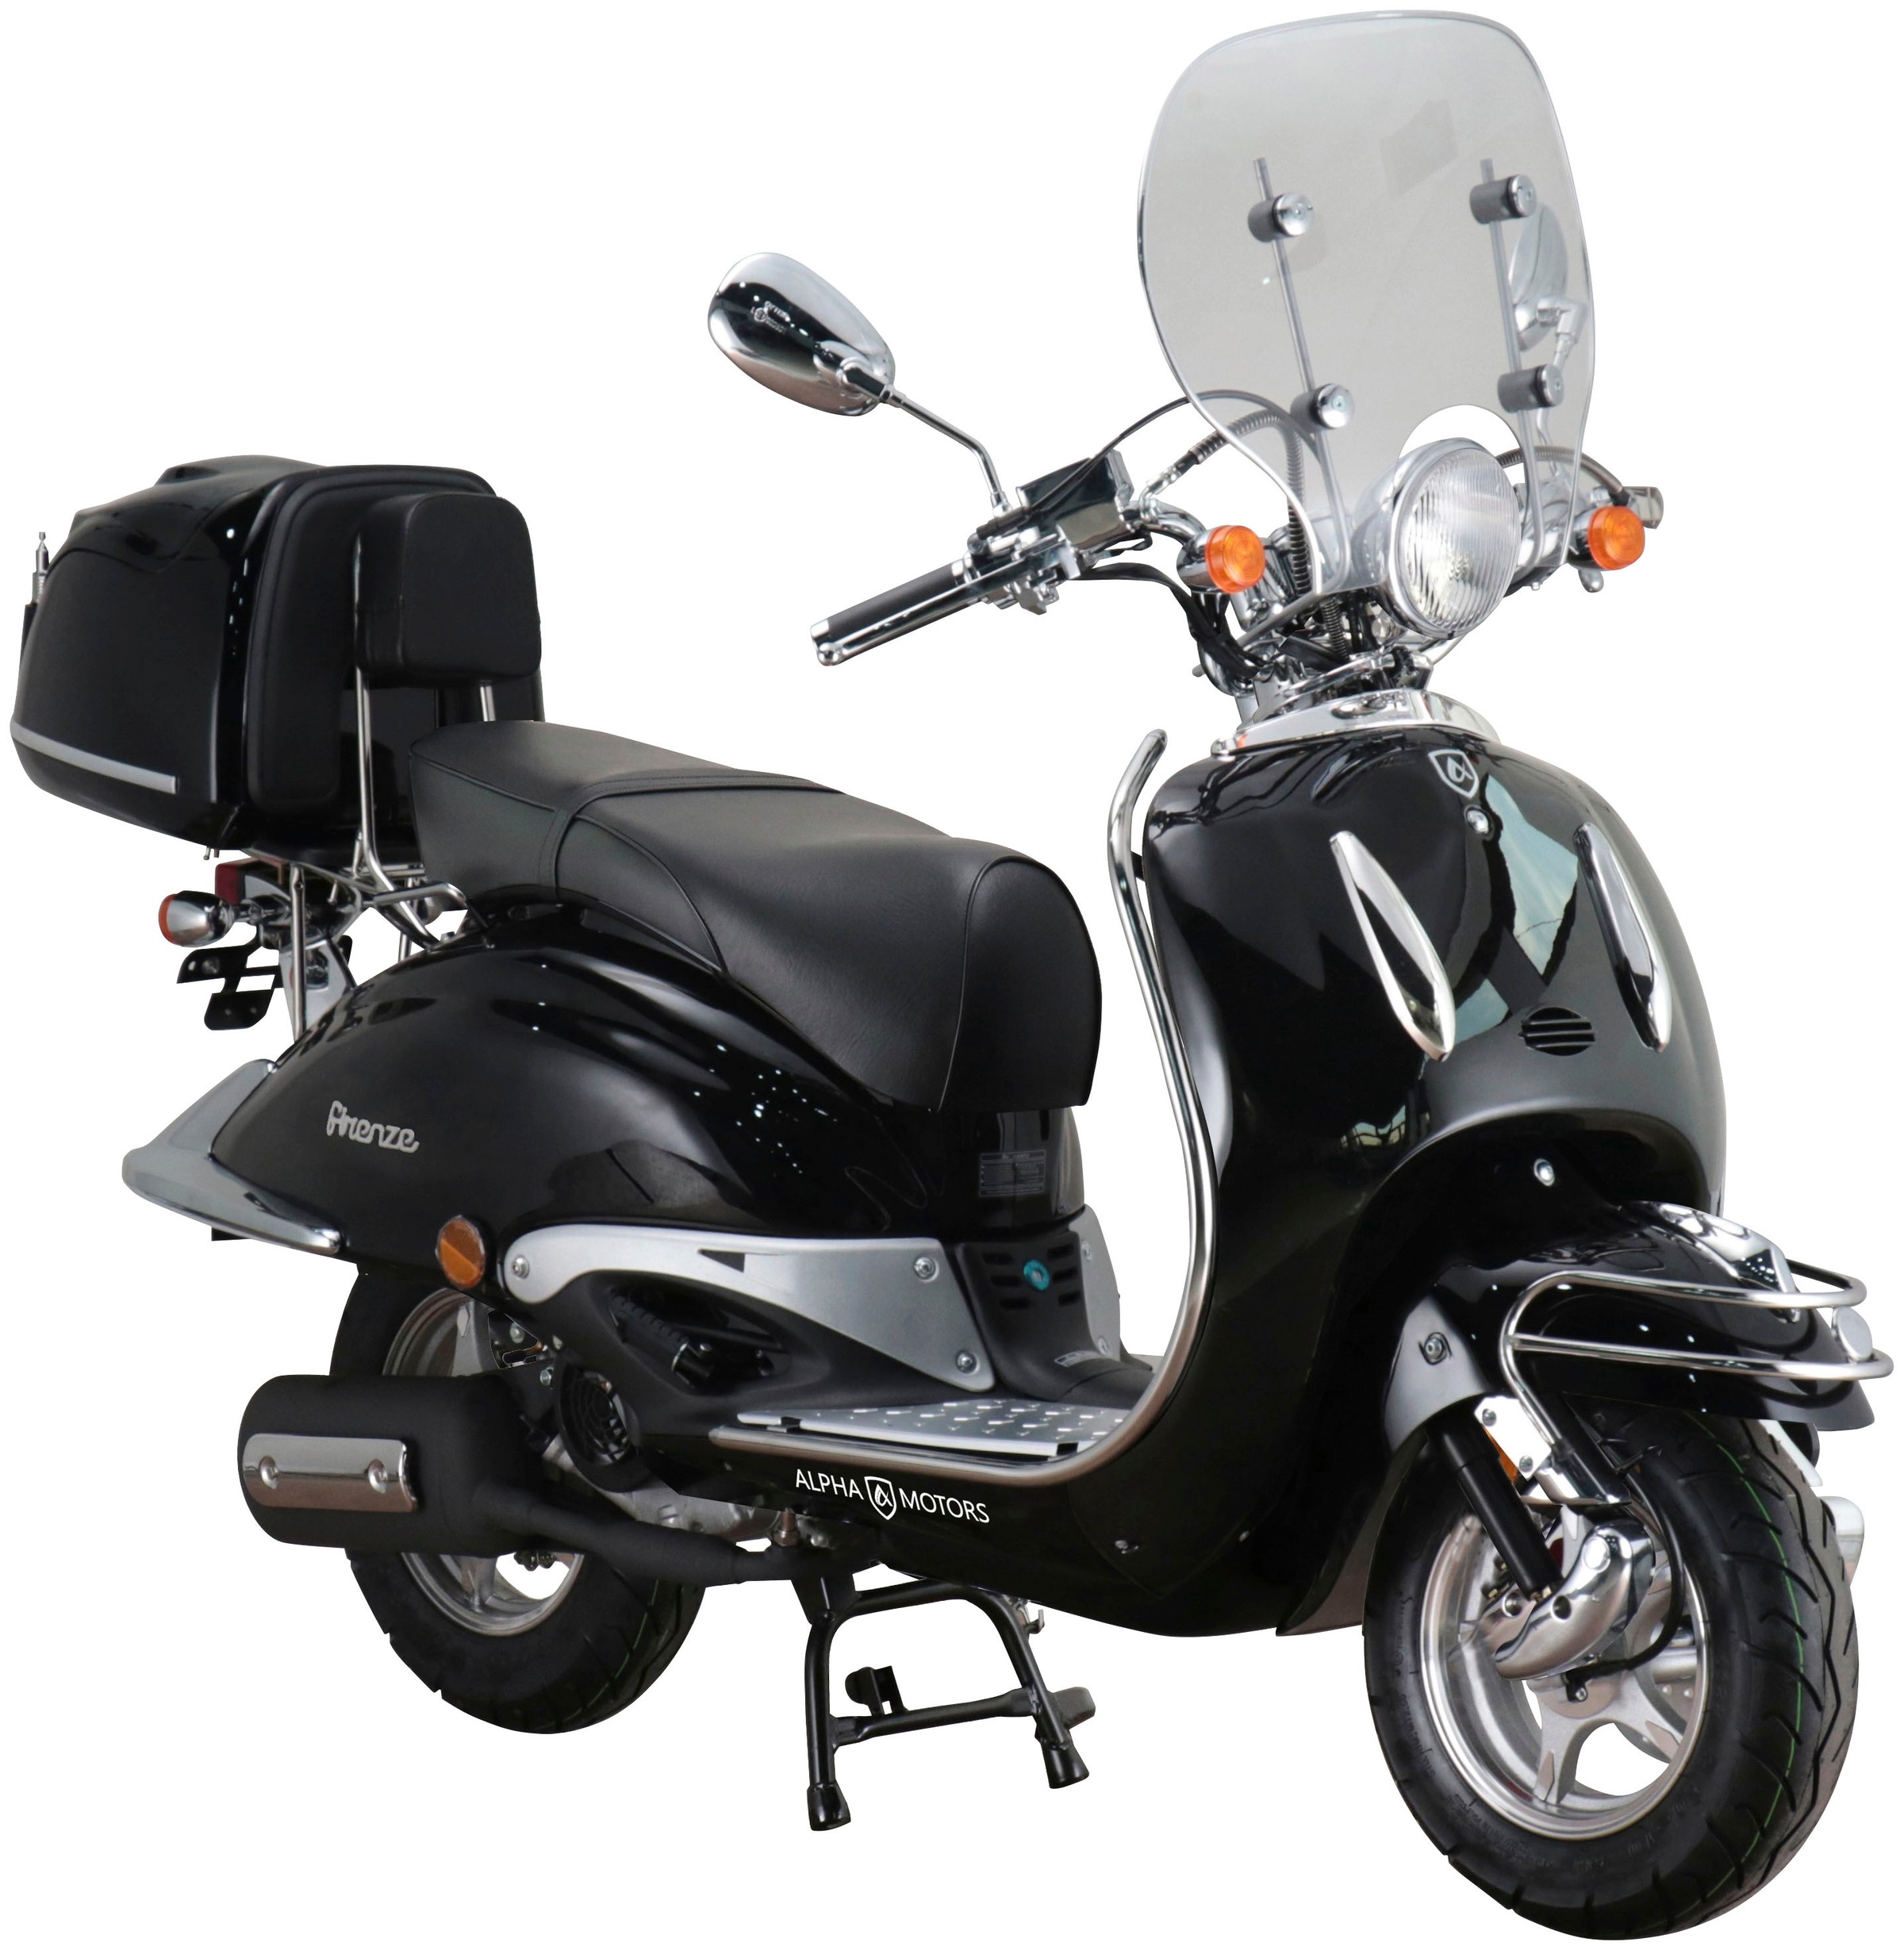 Alpha Motors Motorroller »Firenze Limited«, 50 cm³, 45 km/h, Euro 5, 3 PS, im Retro-Look